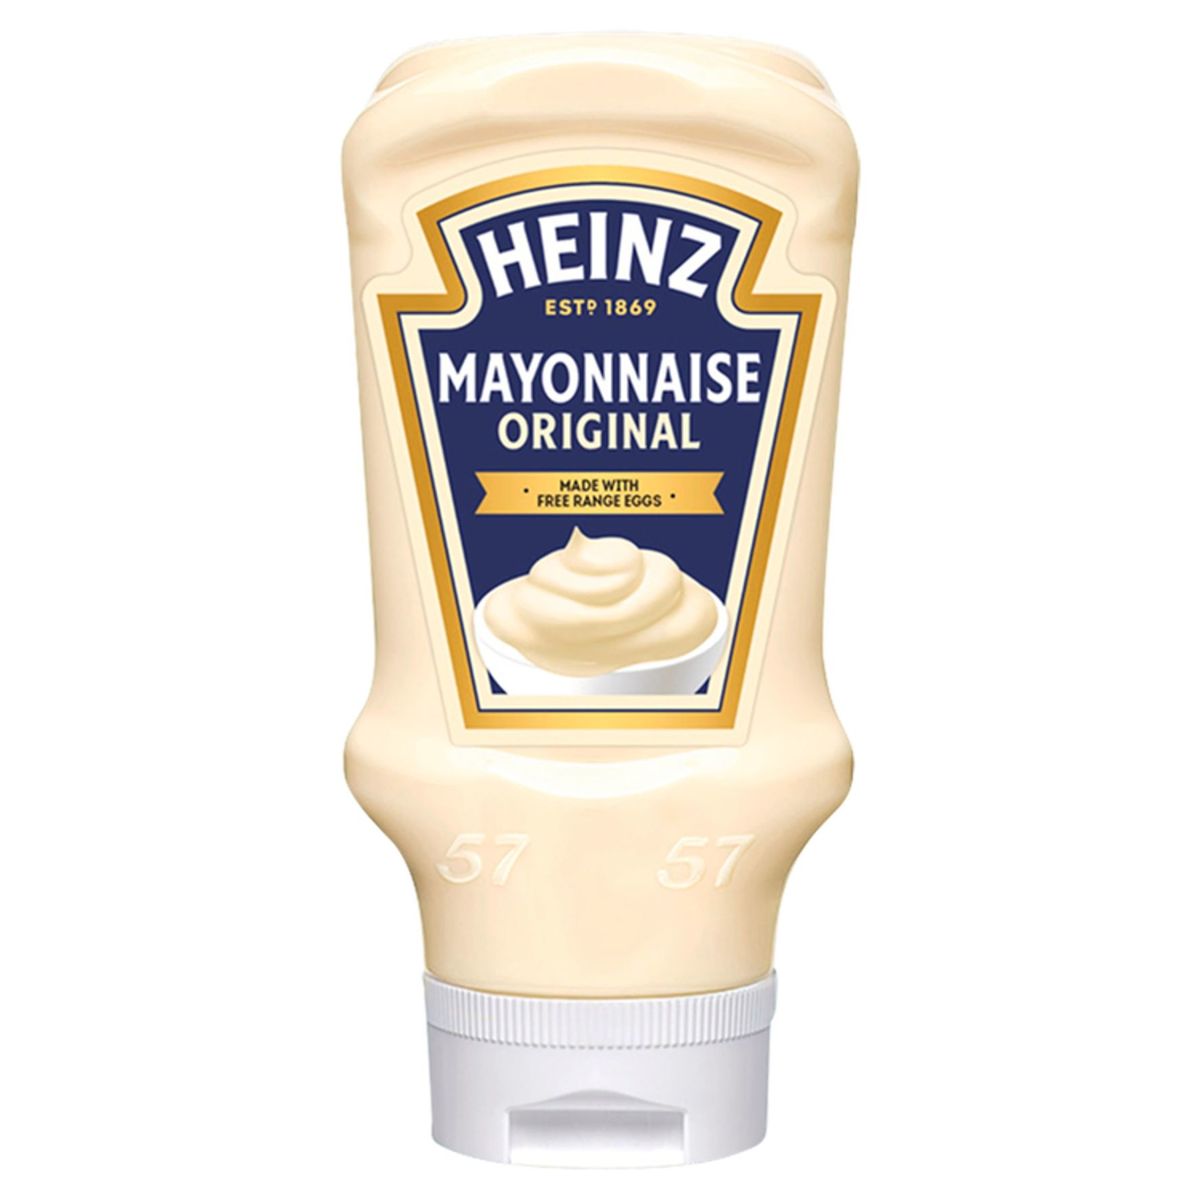 Heinz Mayonaise 400 ml